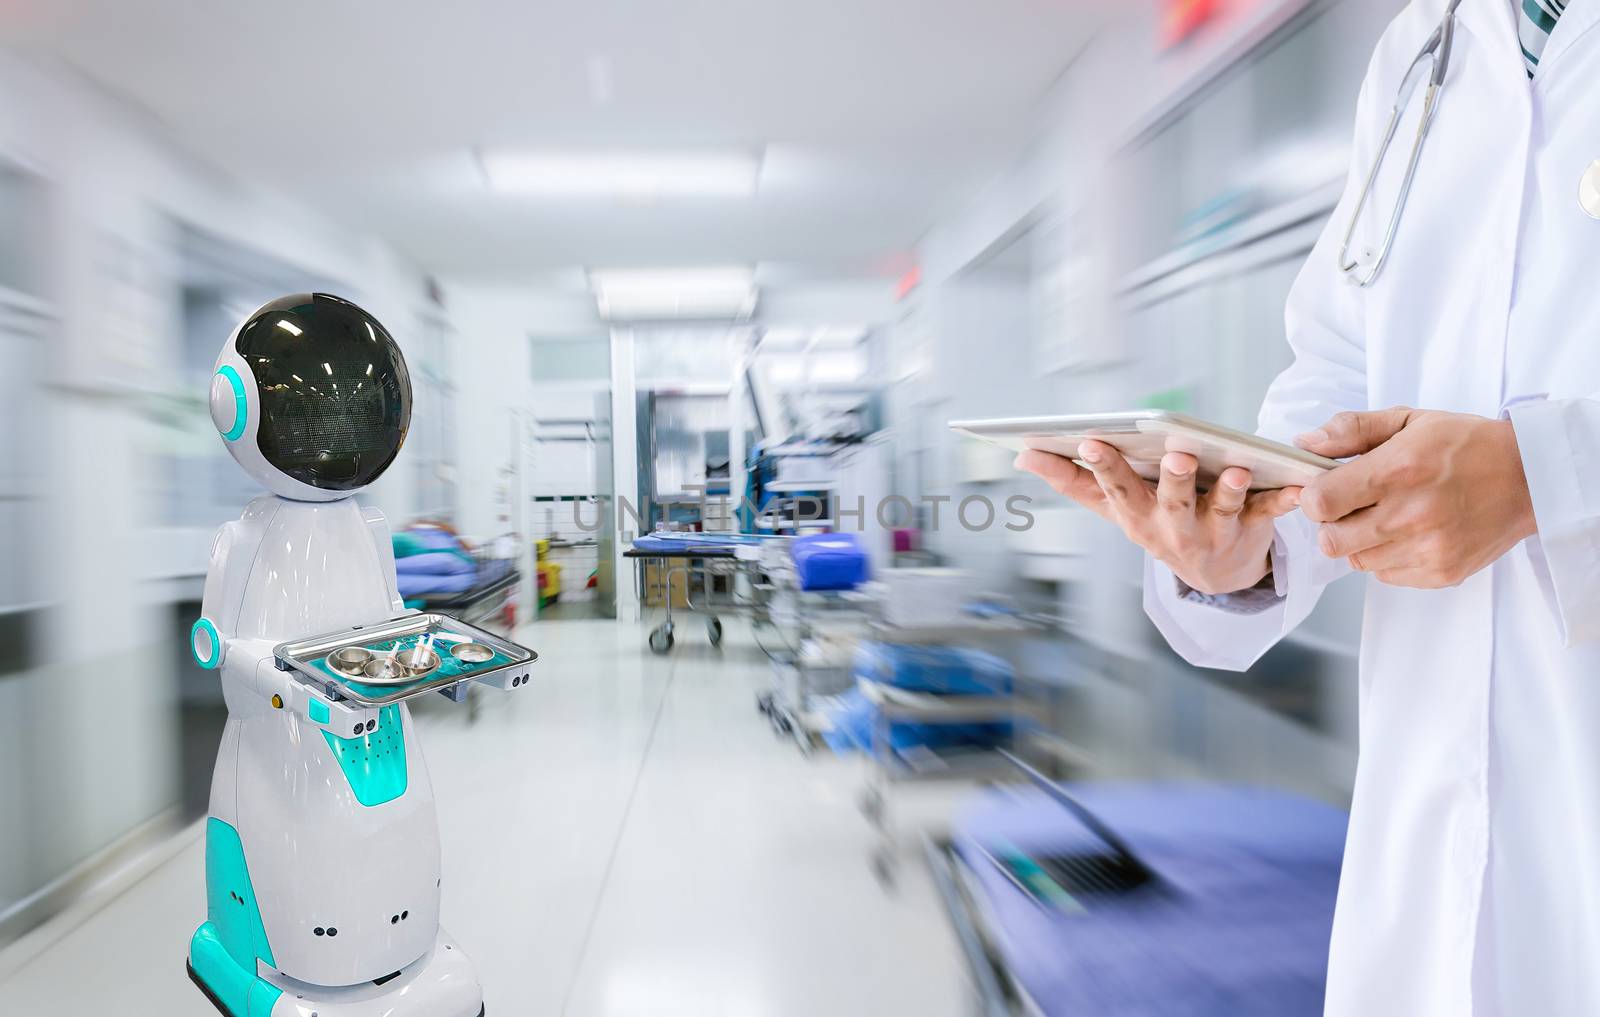 Send medical equipment robot technology in hospital by sompongtom